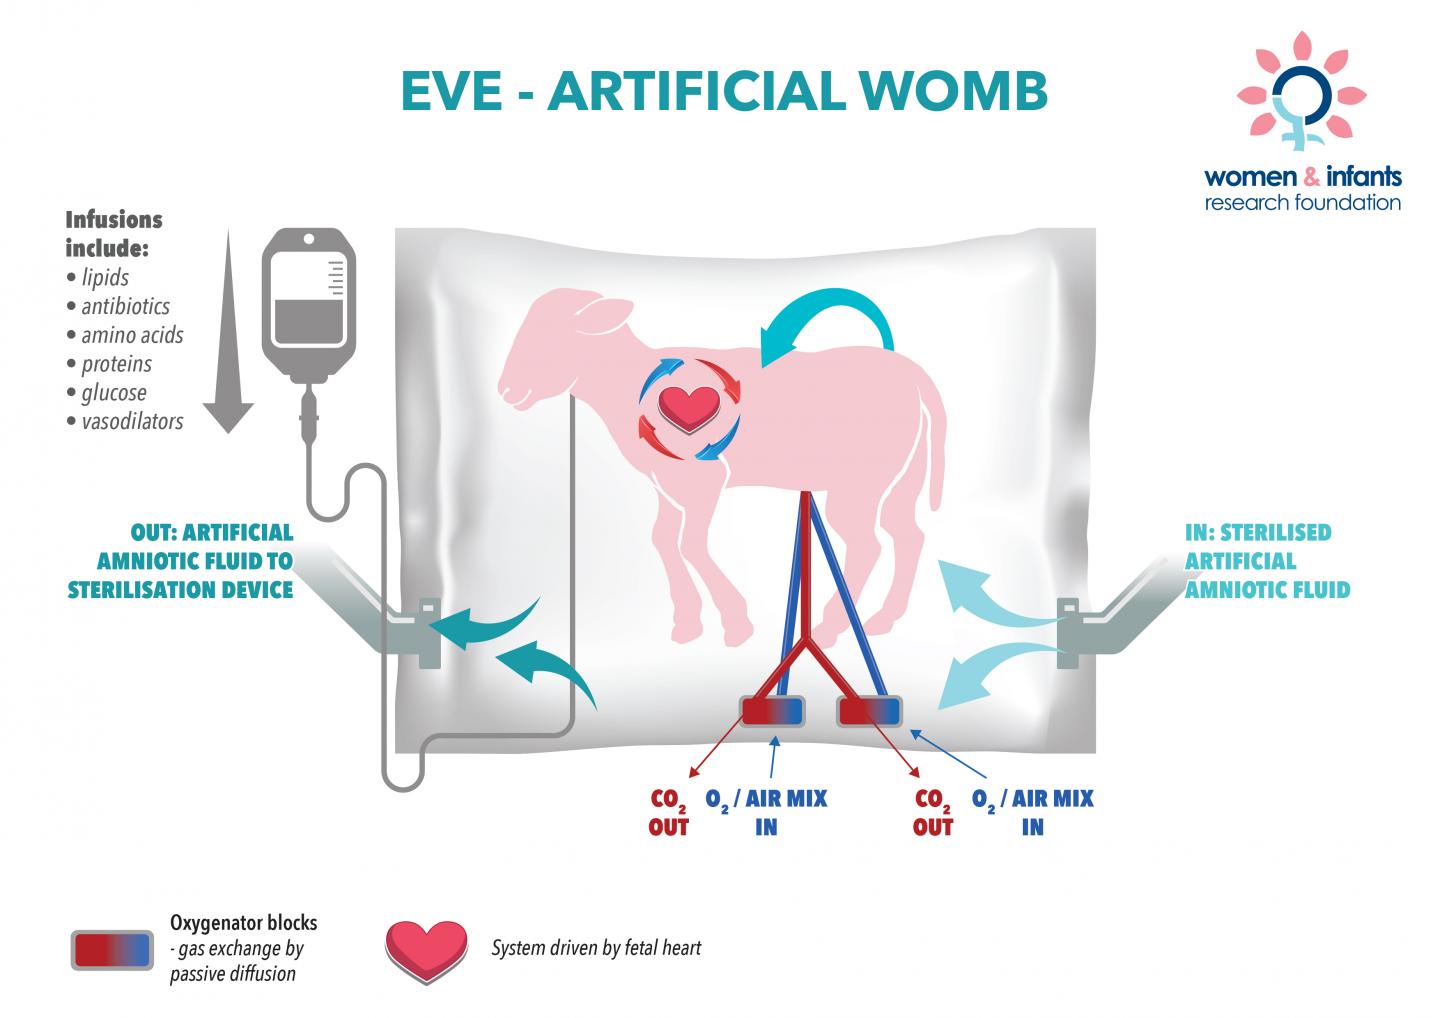 Artificial Womb Raises Hope for Premature Babies